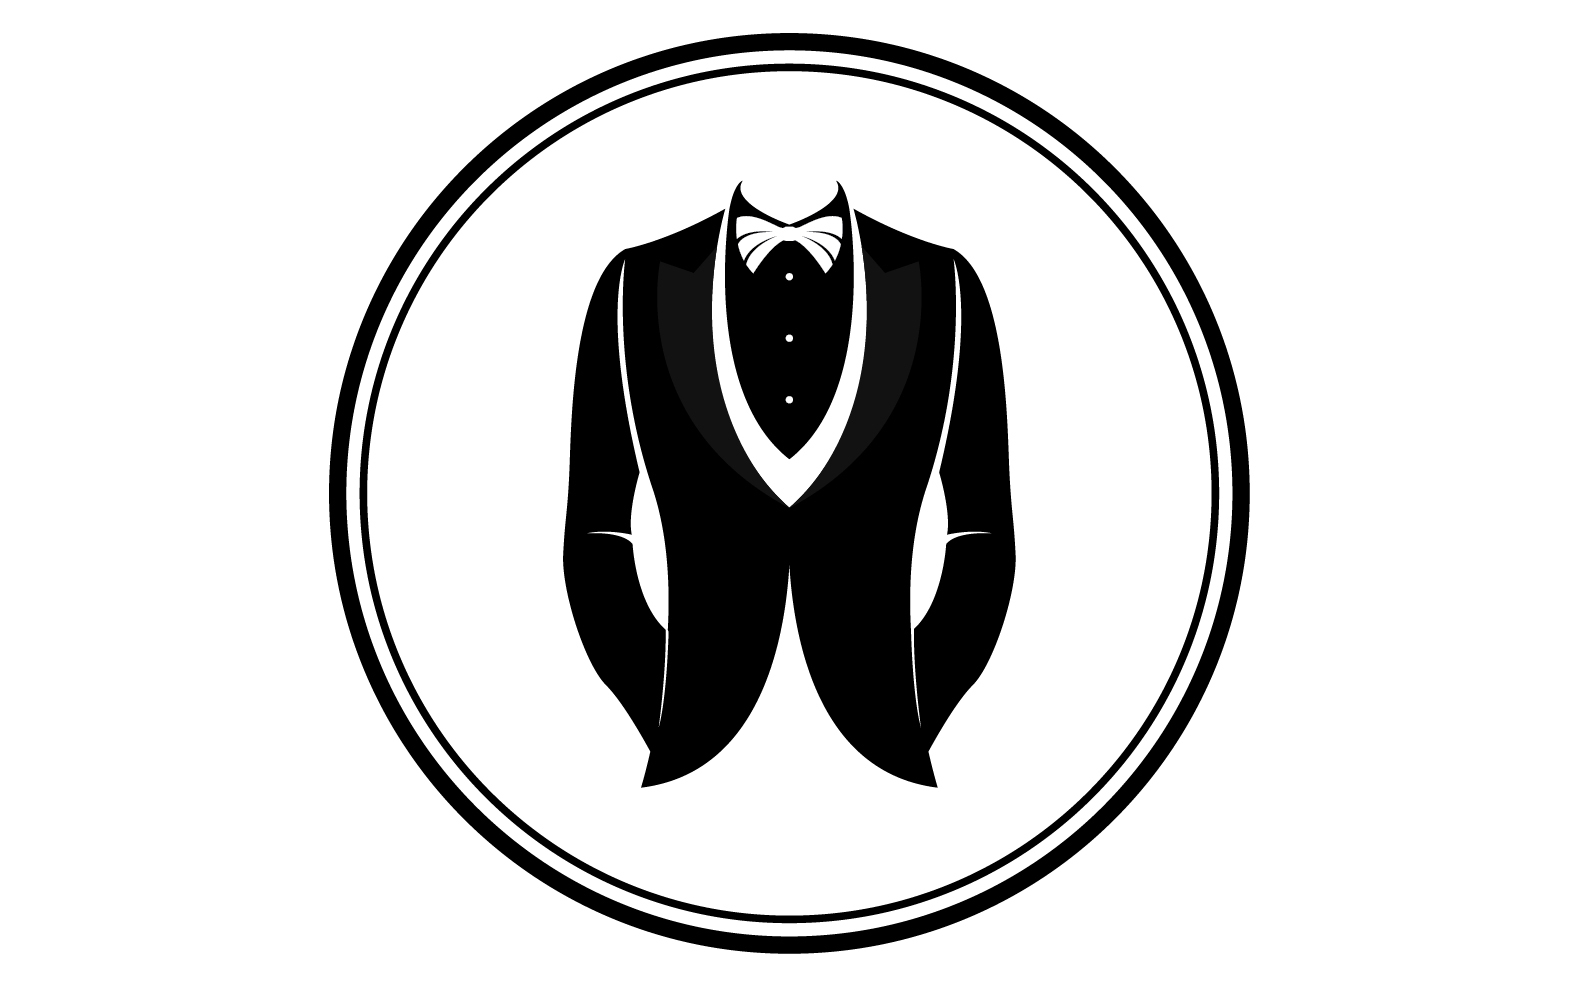 Maid suit logo and symbol vector design v15